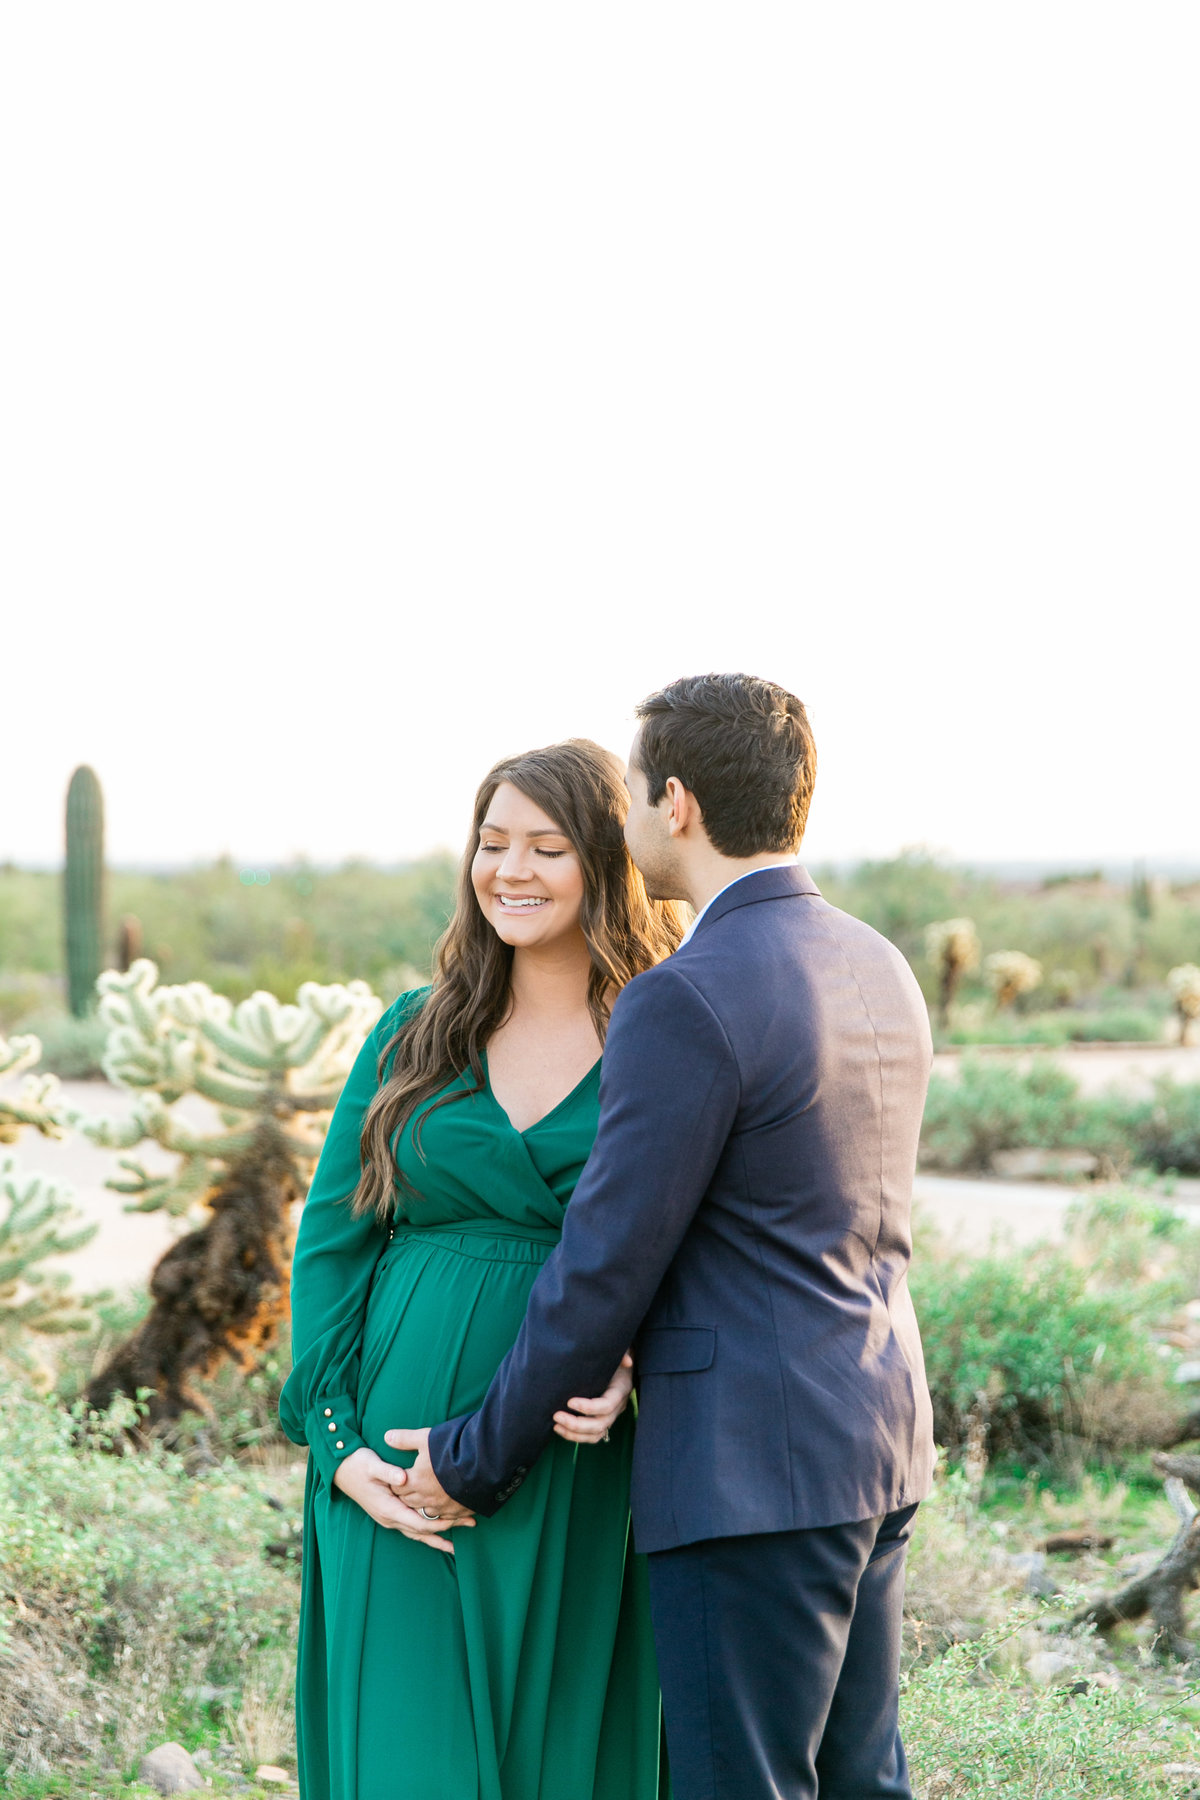 Karlie Colleen Photography - Scottsdale Arizona - Maternity Photos - Shelby & Cris-40